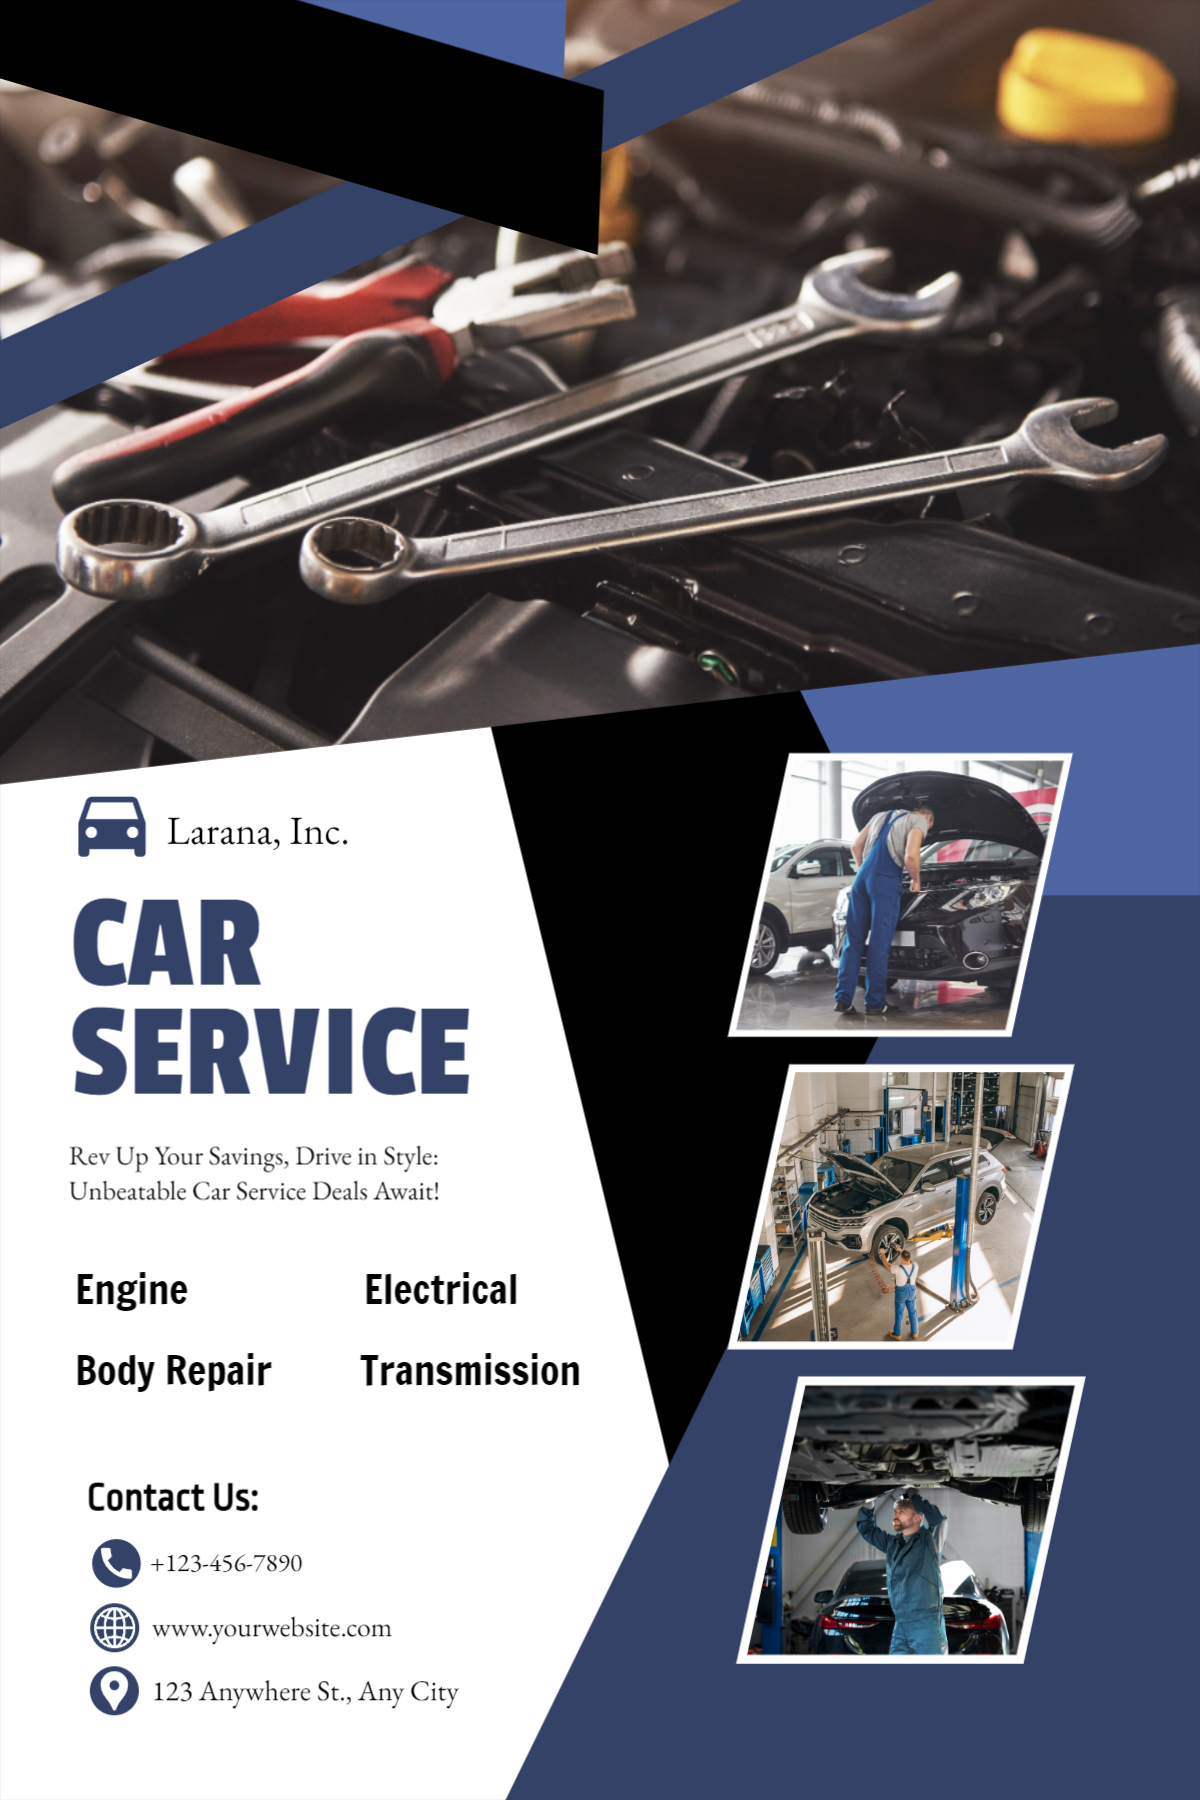 Car service poster design download for free